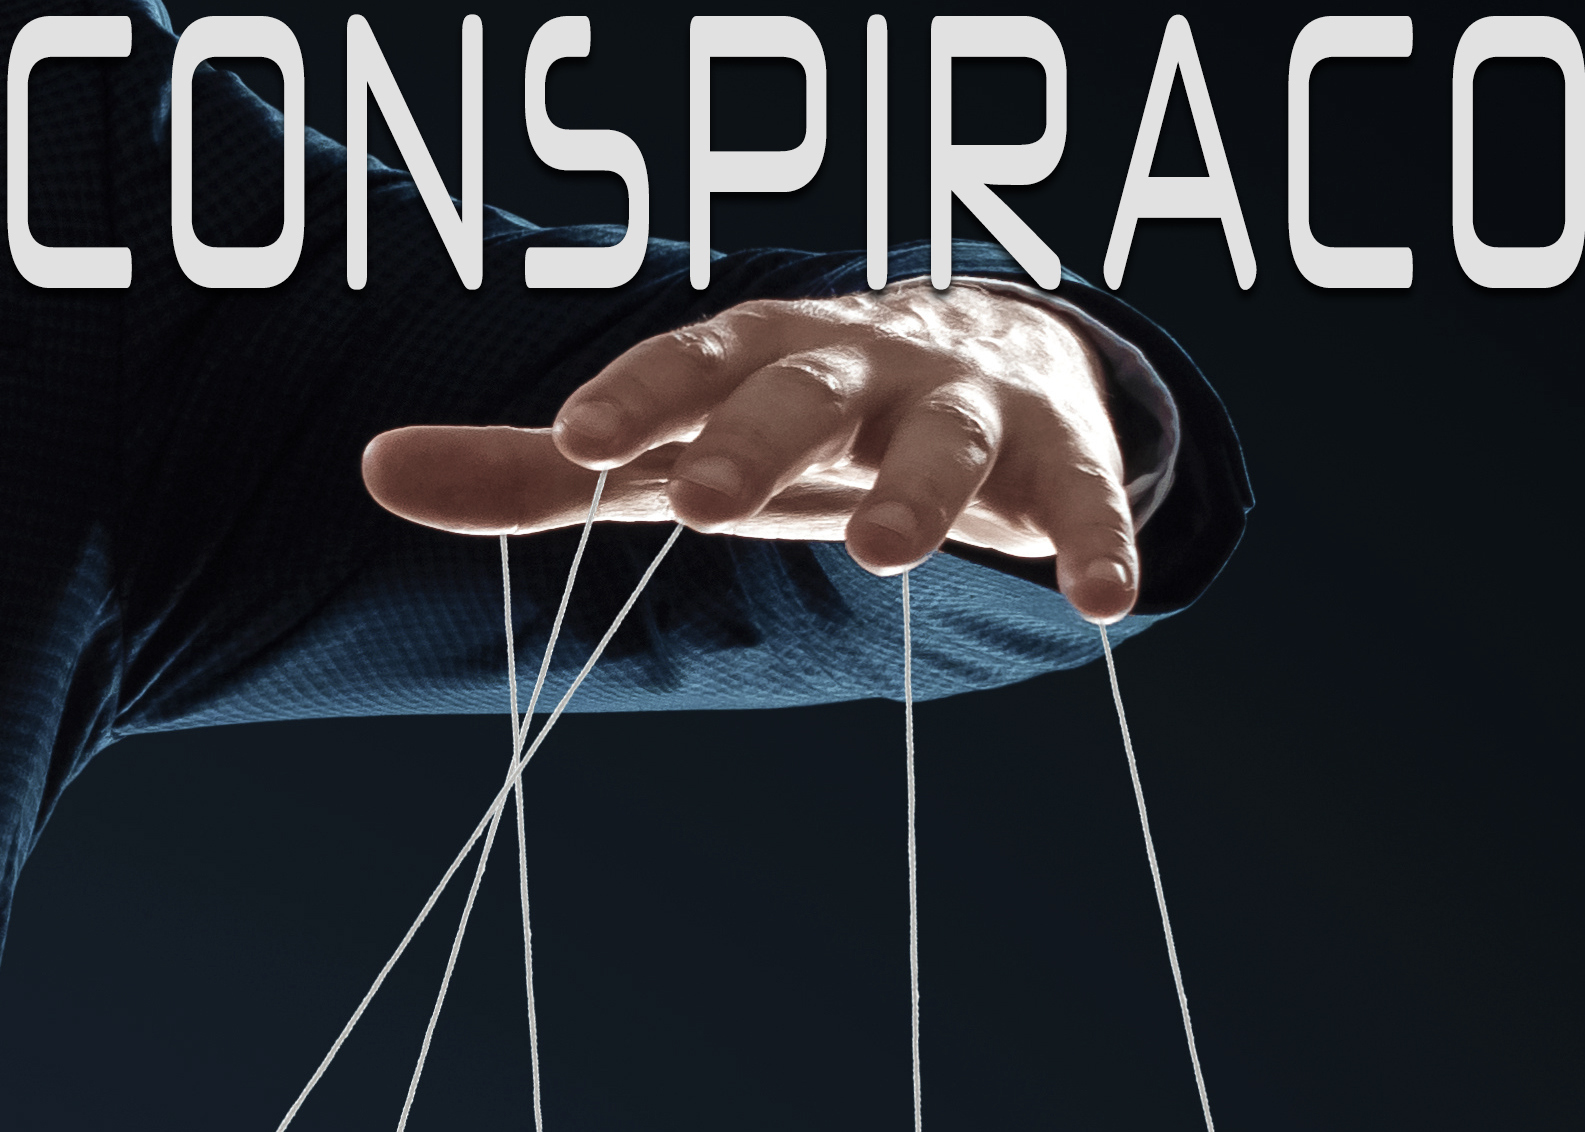 Conspiraco – New Dystopian Science Fiction Short